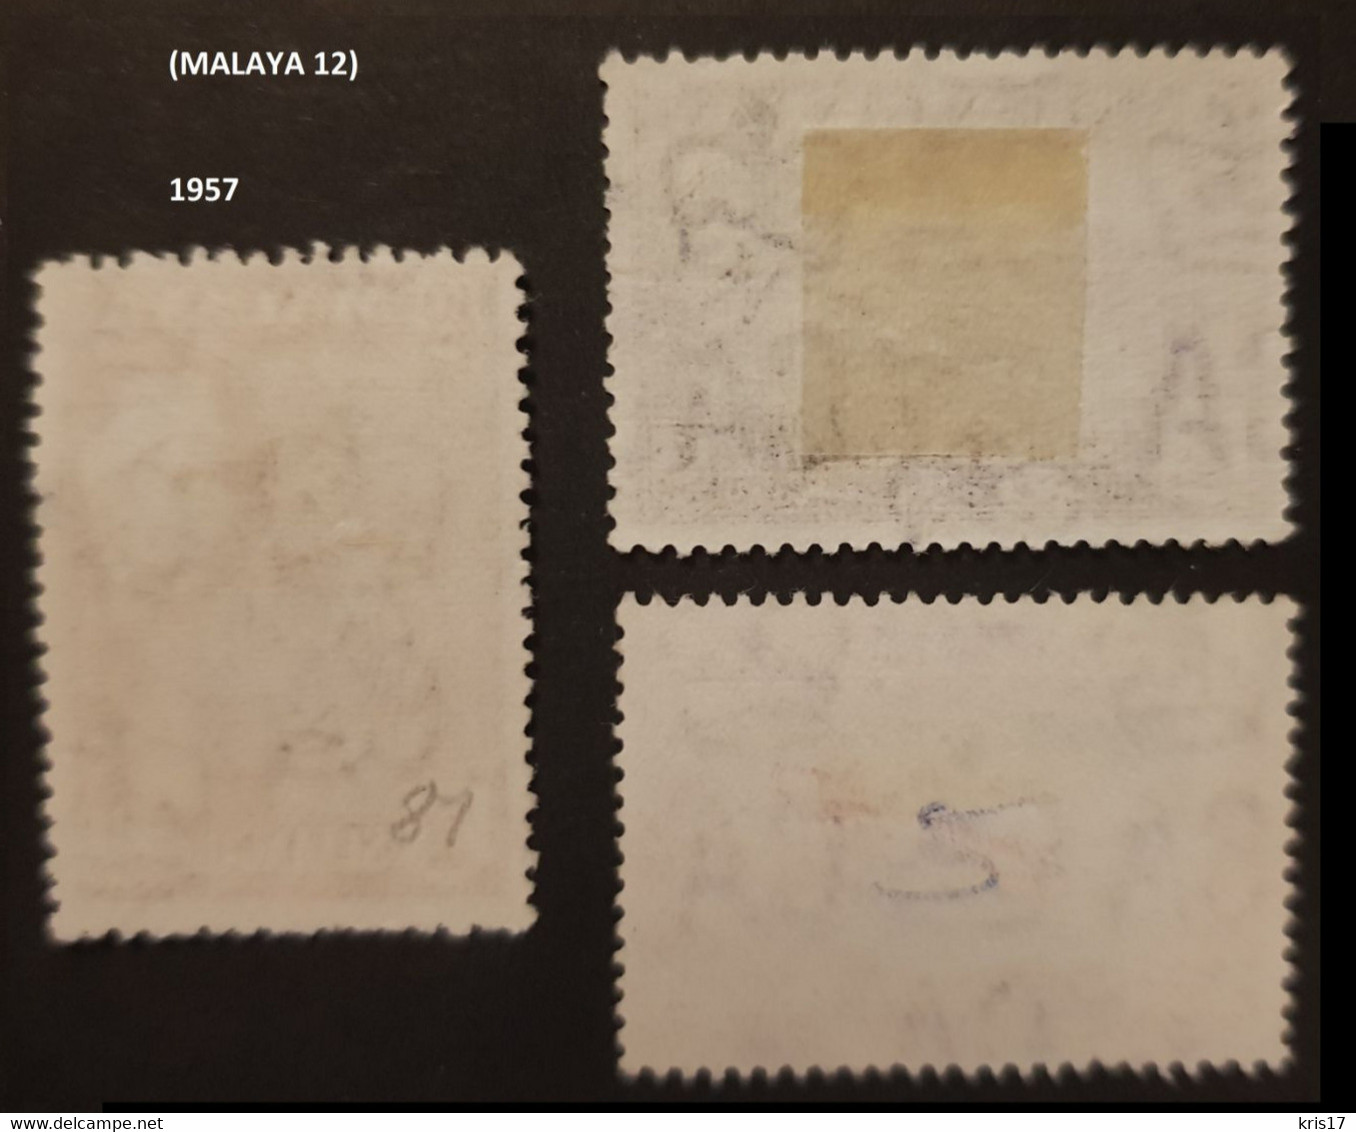 (ti) (MALAYA12) Malaisie, Malaya,SELANGOR 1957 - Malayan Postal Union